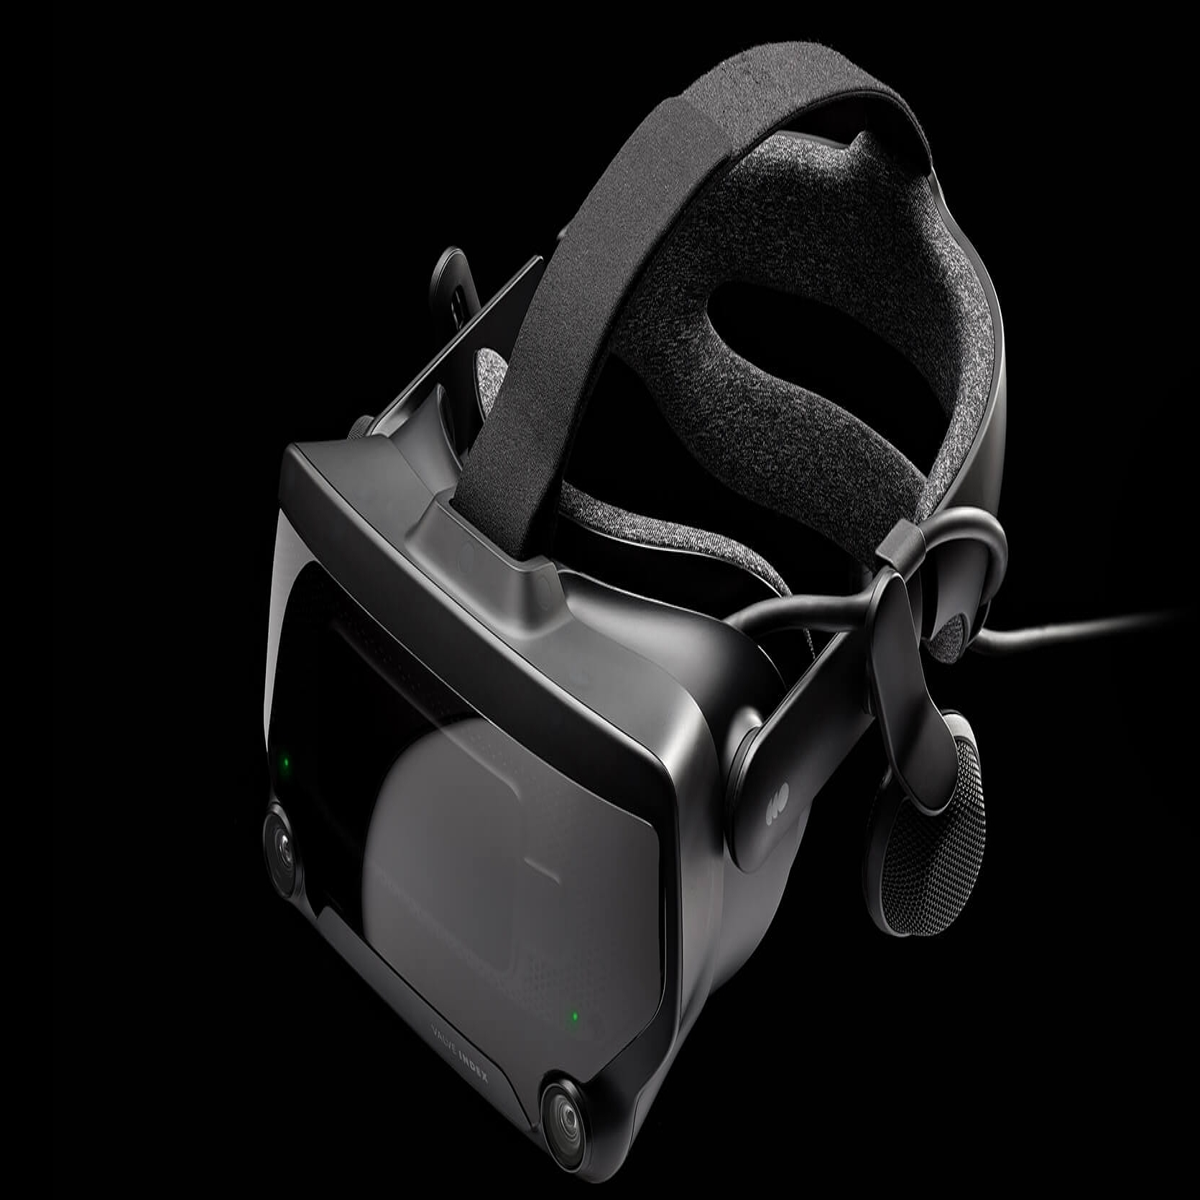 F1 22 Review (Steam VR) - Valve Index, HTC Vive & Oculus Rift